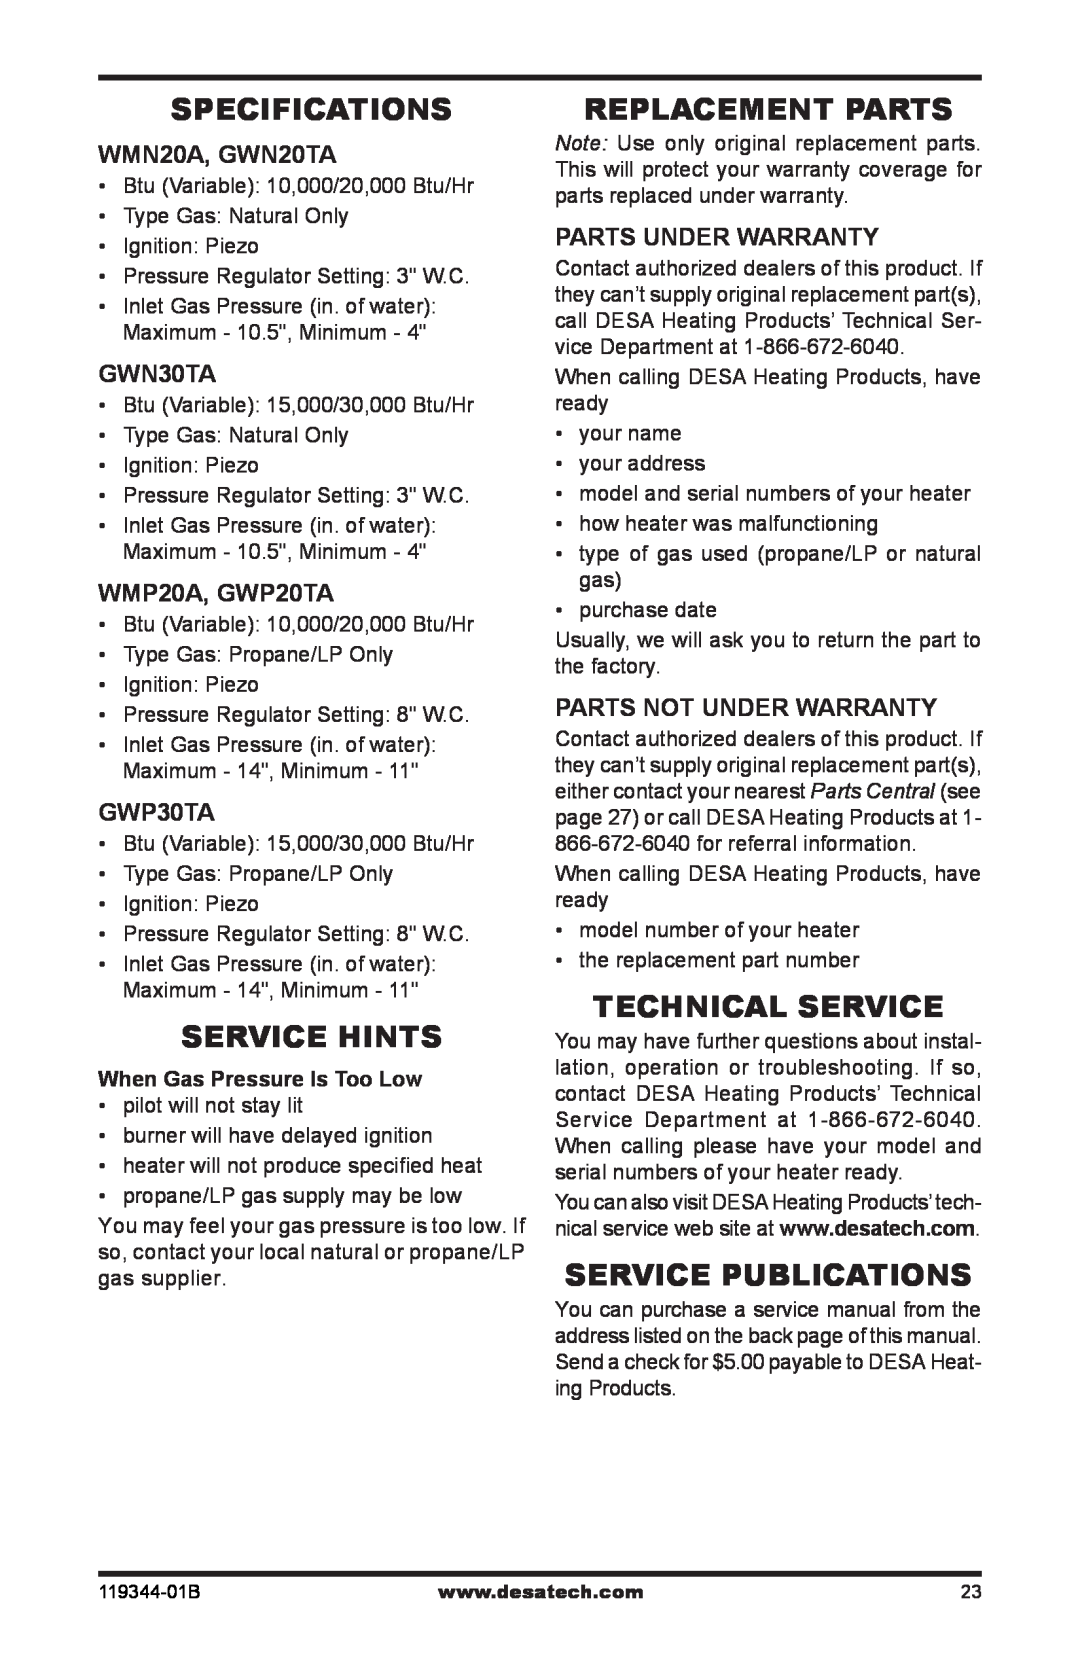 Desa WMP20A Specifications, Service Hints, Replacement Parts, Technical Service, Service Publications, WMN20A, GWN20TA 